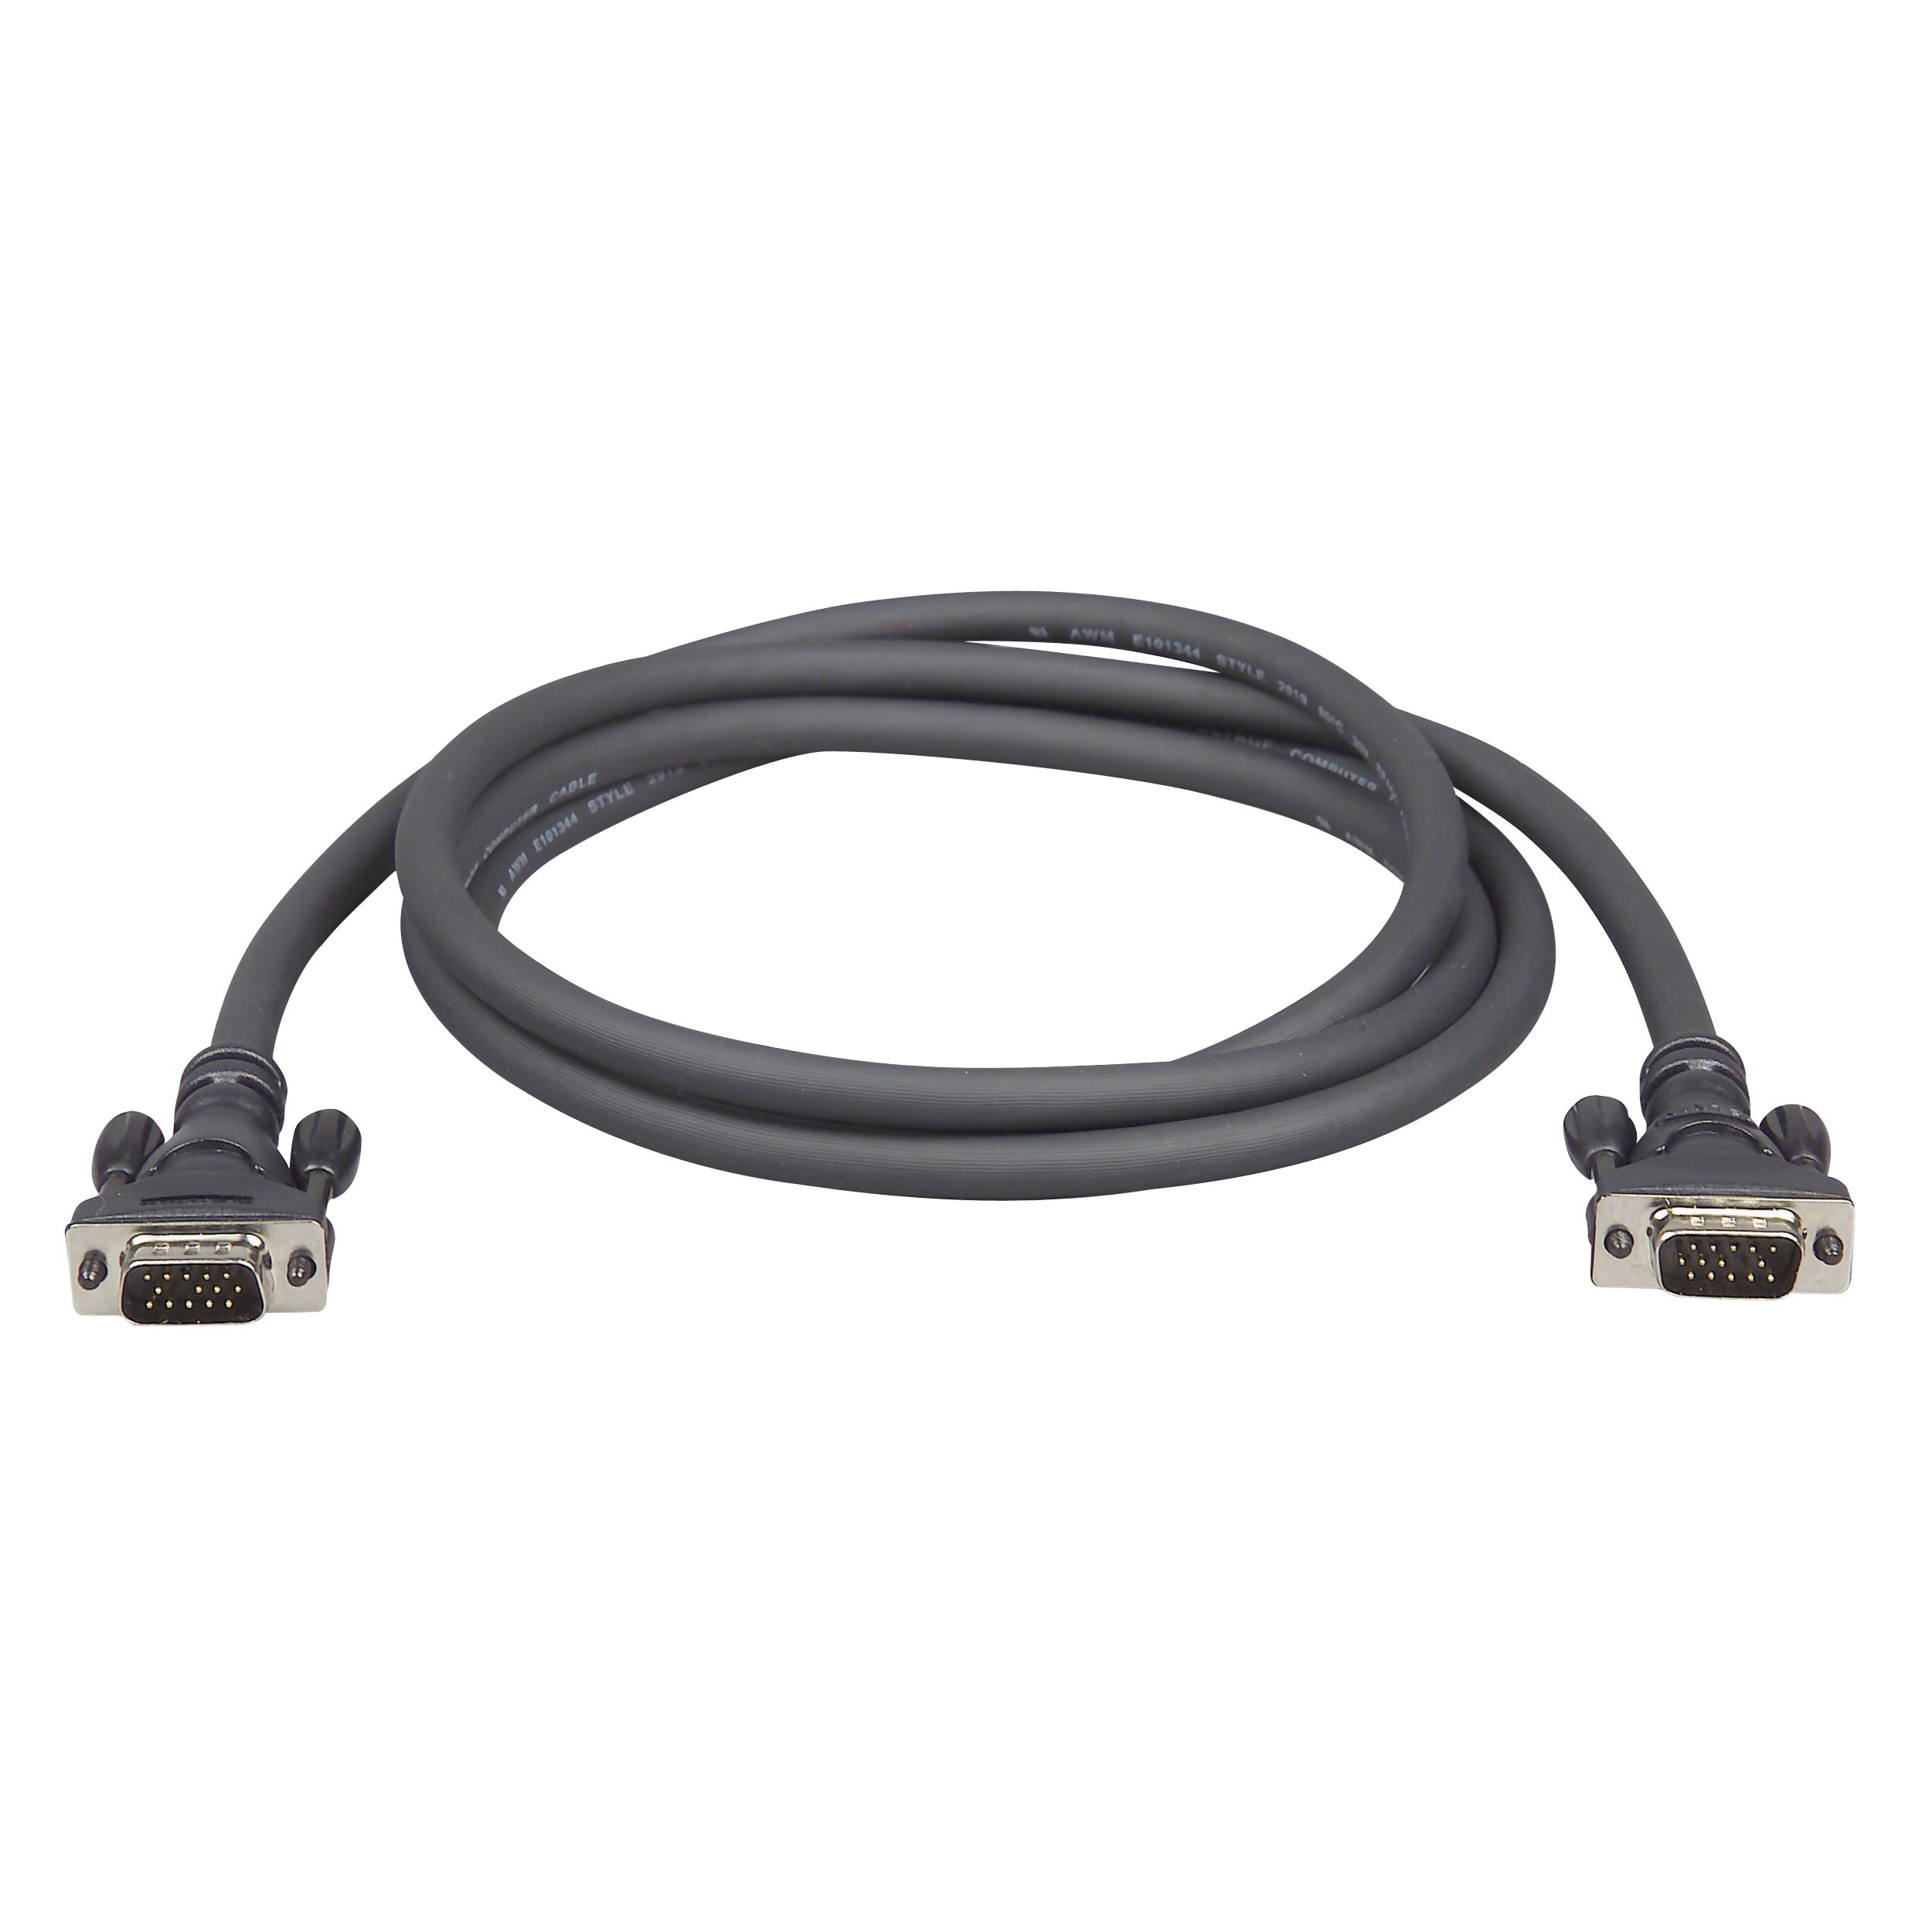 Belkin Pro Series High-Integrity VGA/SVGA Monitor Cable